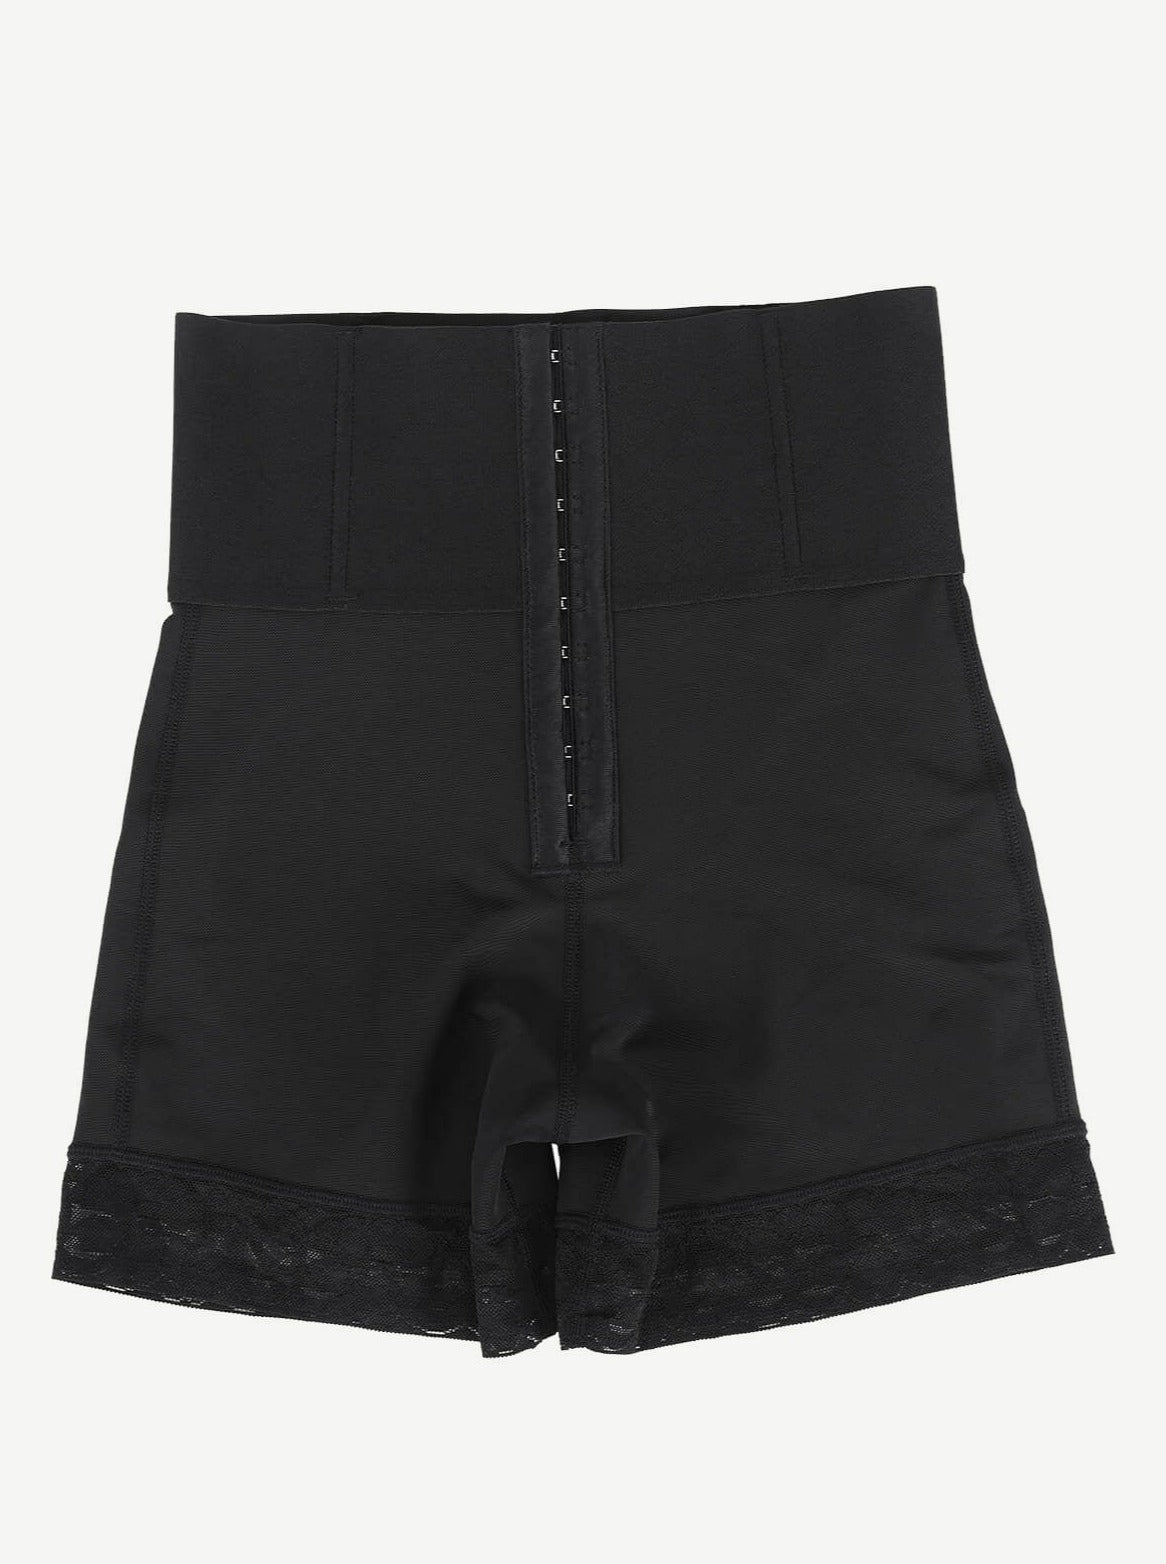 QRIC High Waist Body Shaper Shorts Shapewear for Women Tummy Control Butt  Lifter Thigh Slimmer #1 Shorts-Black S 